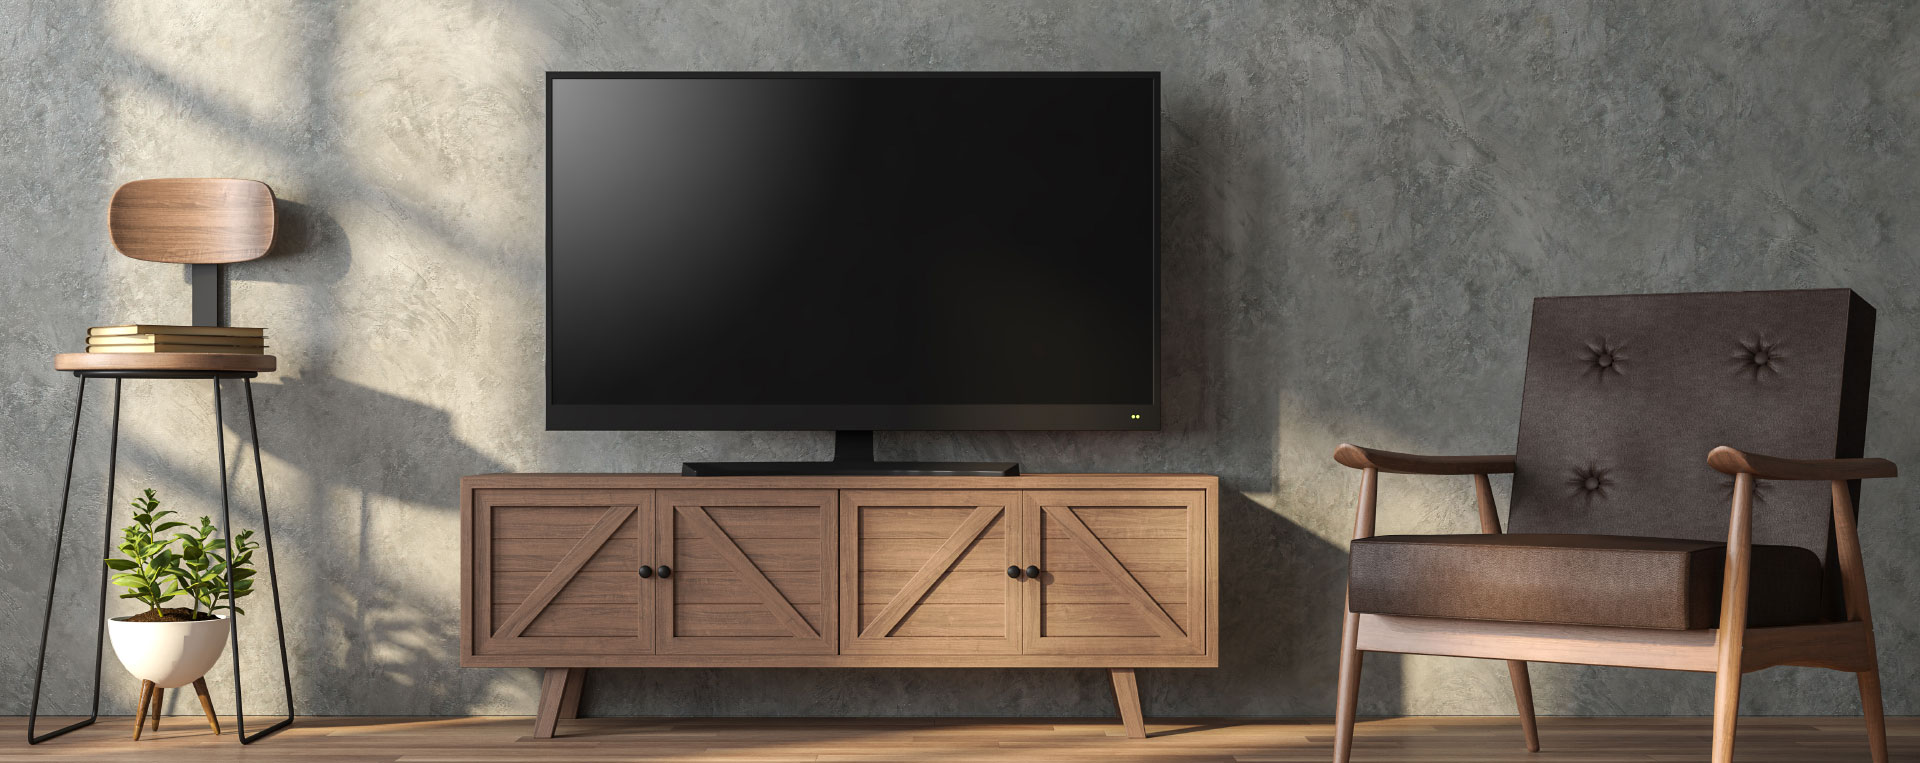 5 Tips Sederhana Merawat TV LED, Mudah dan Tidak Ribet